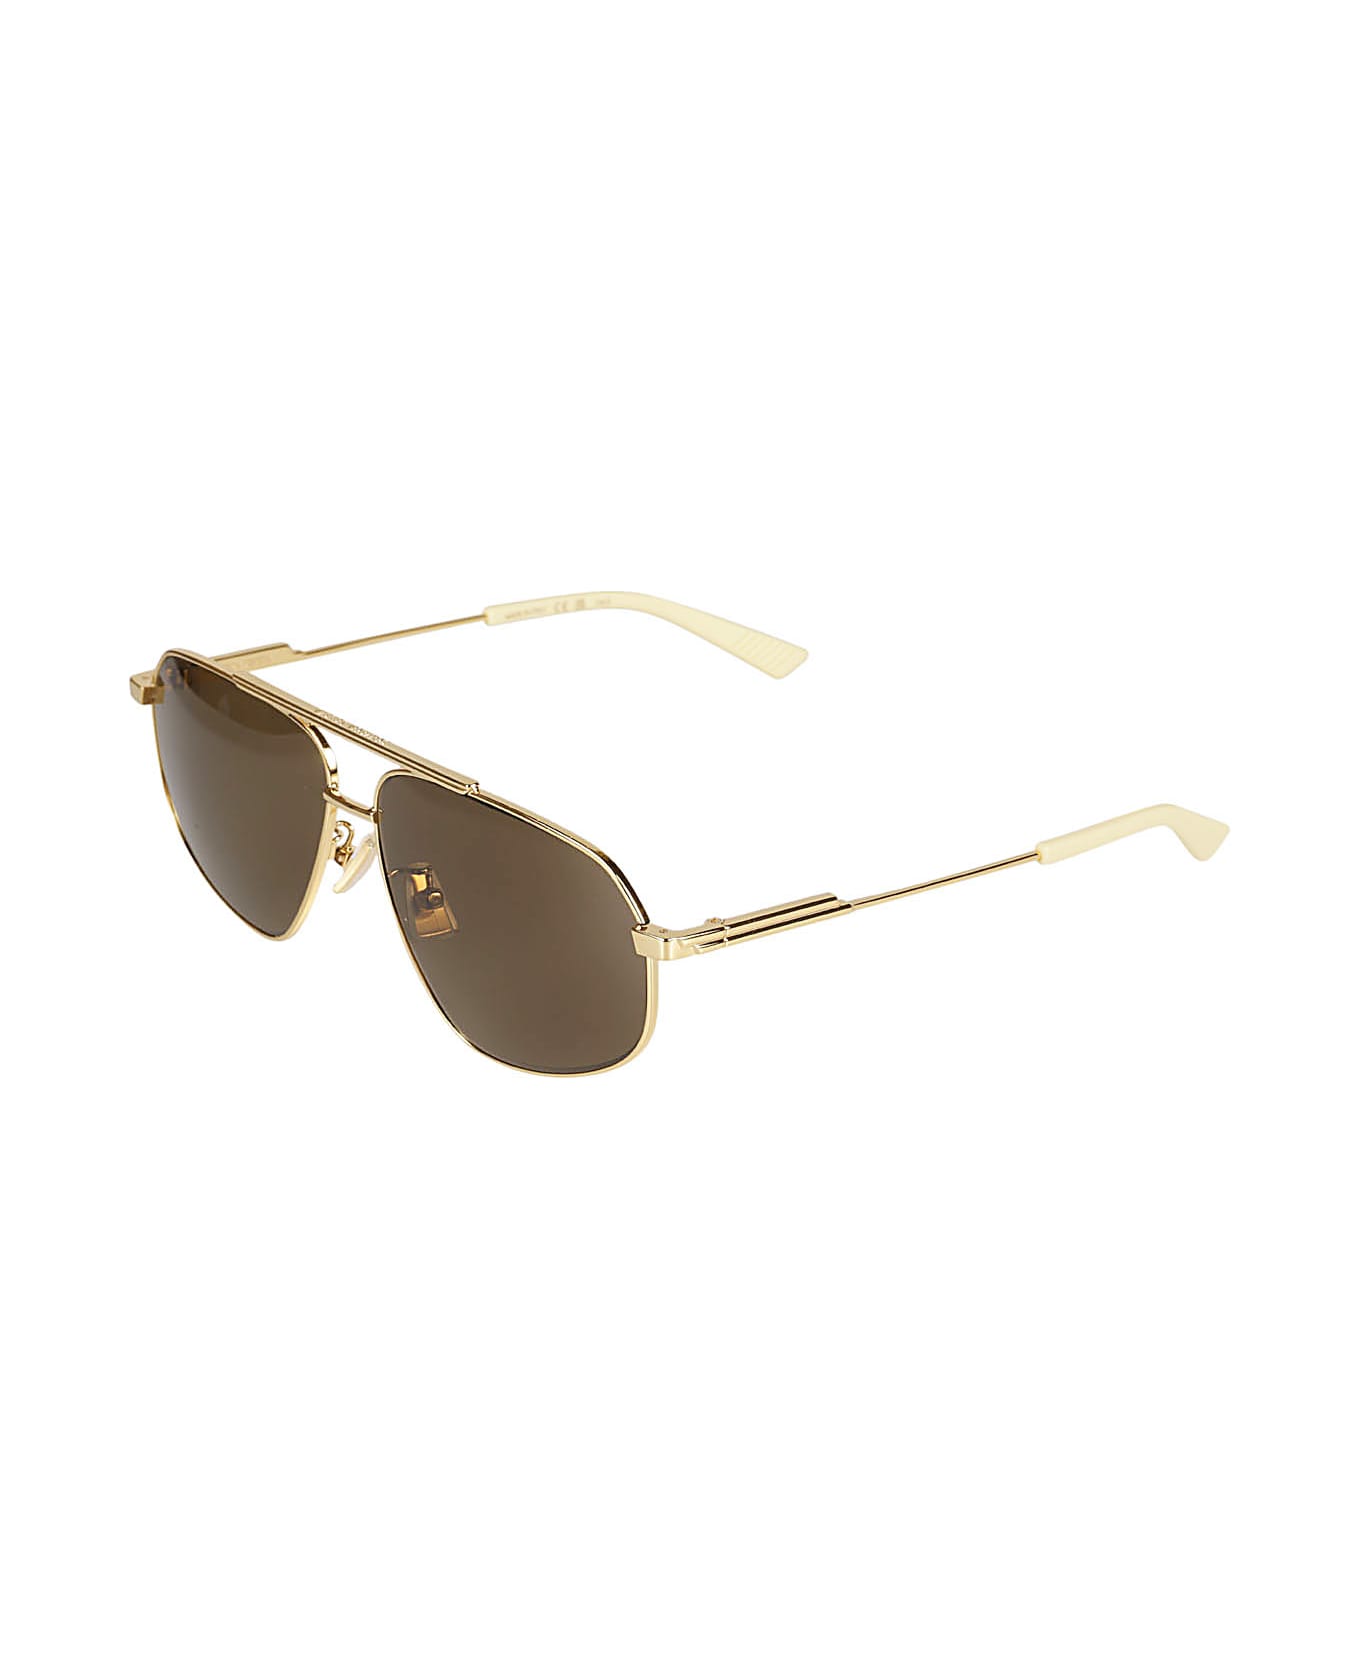 Bottega Veneta Eyewear Gold-tone Aviatore Style the Sunglasses - Gold/Brown